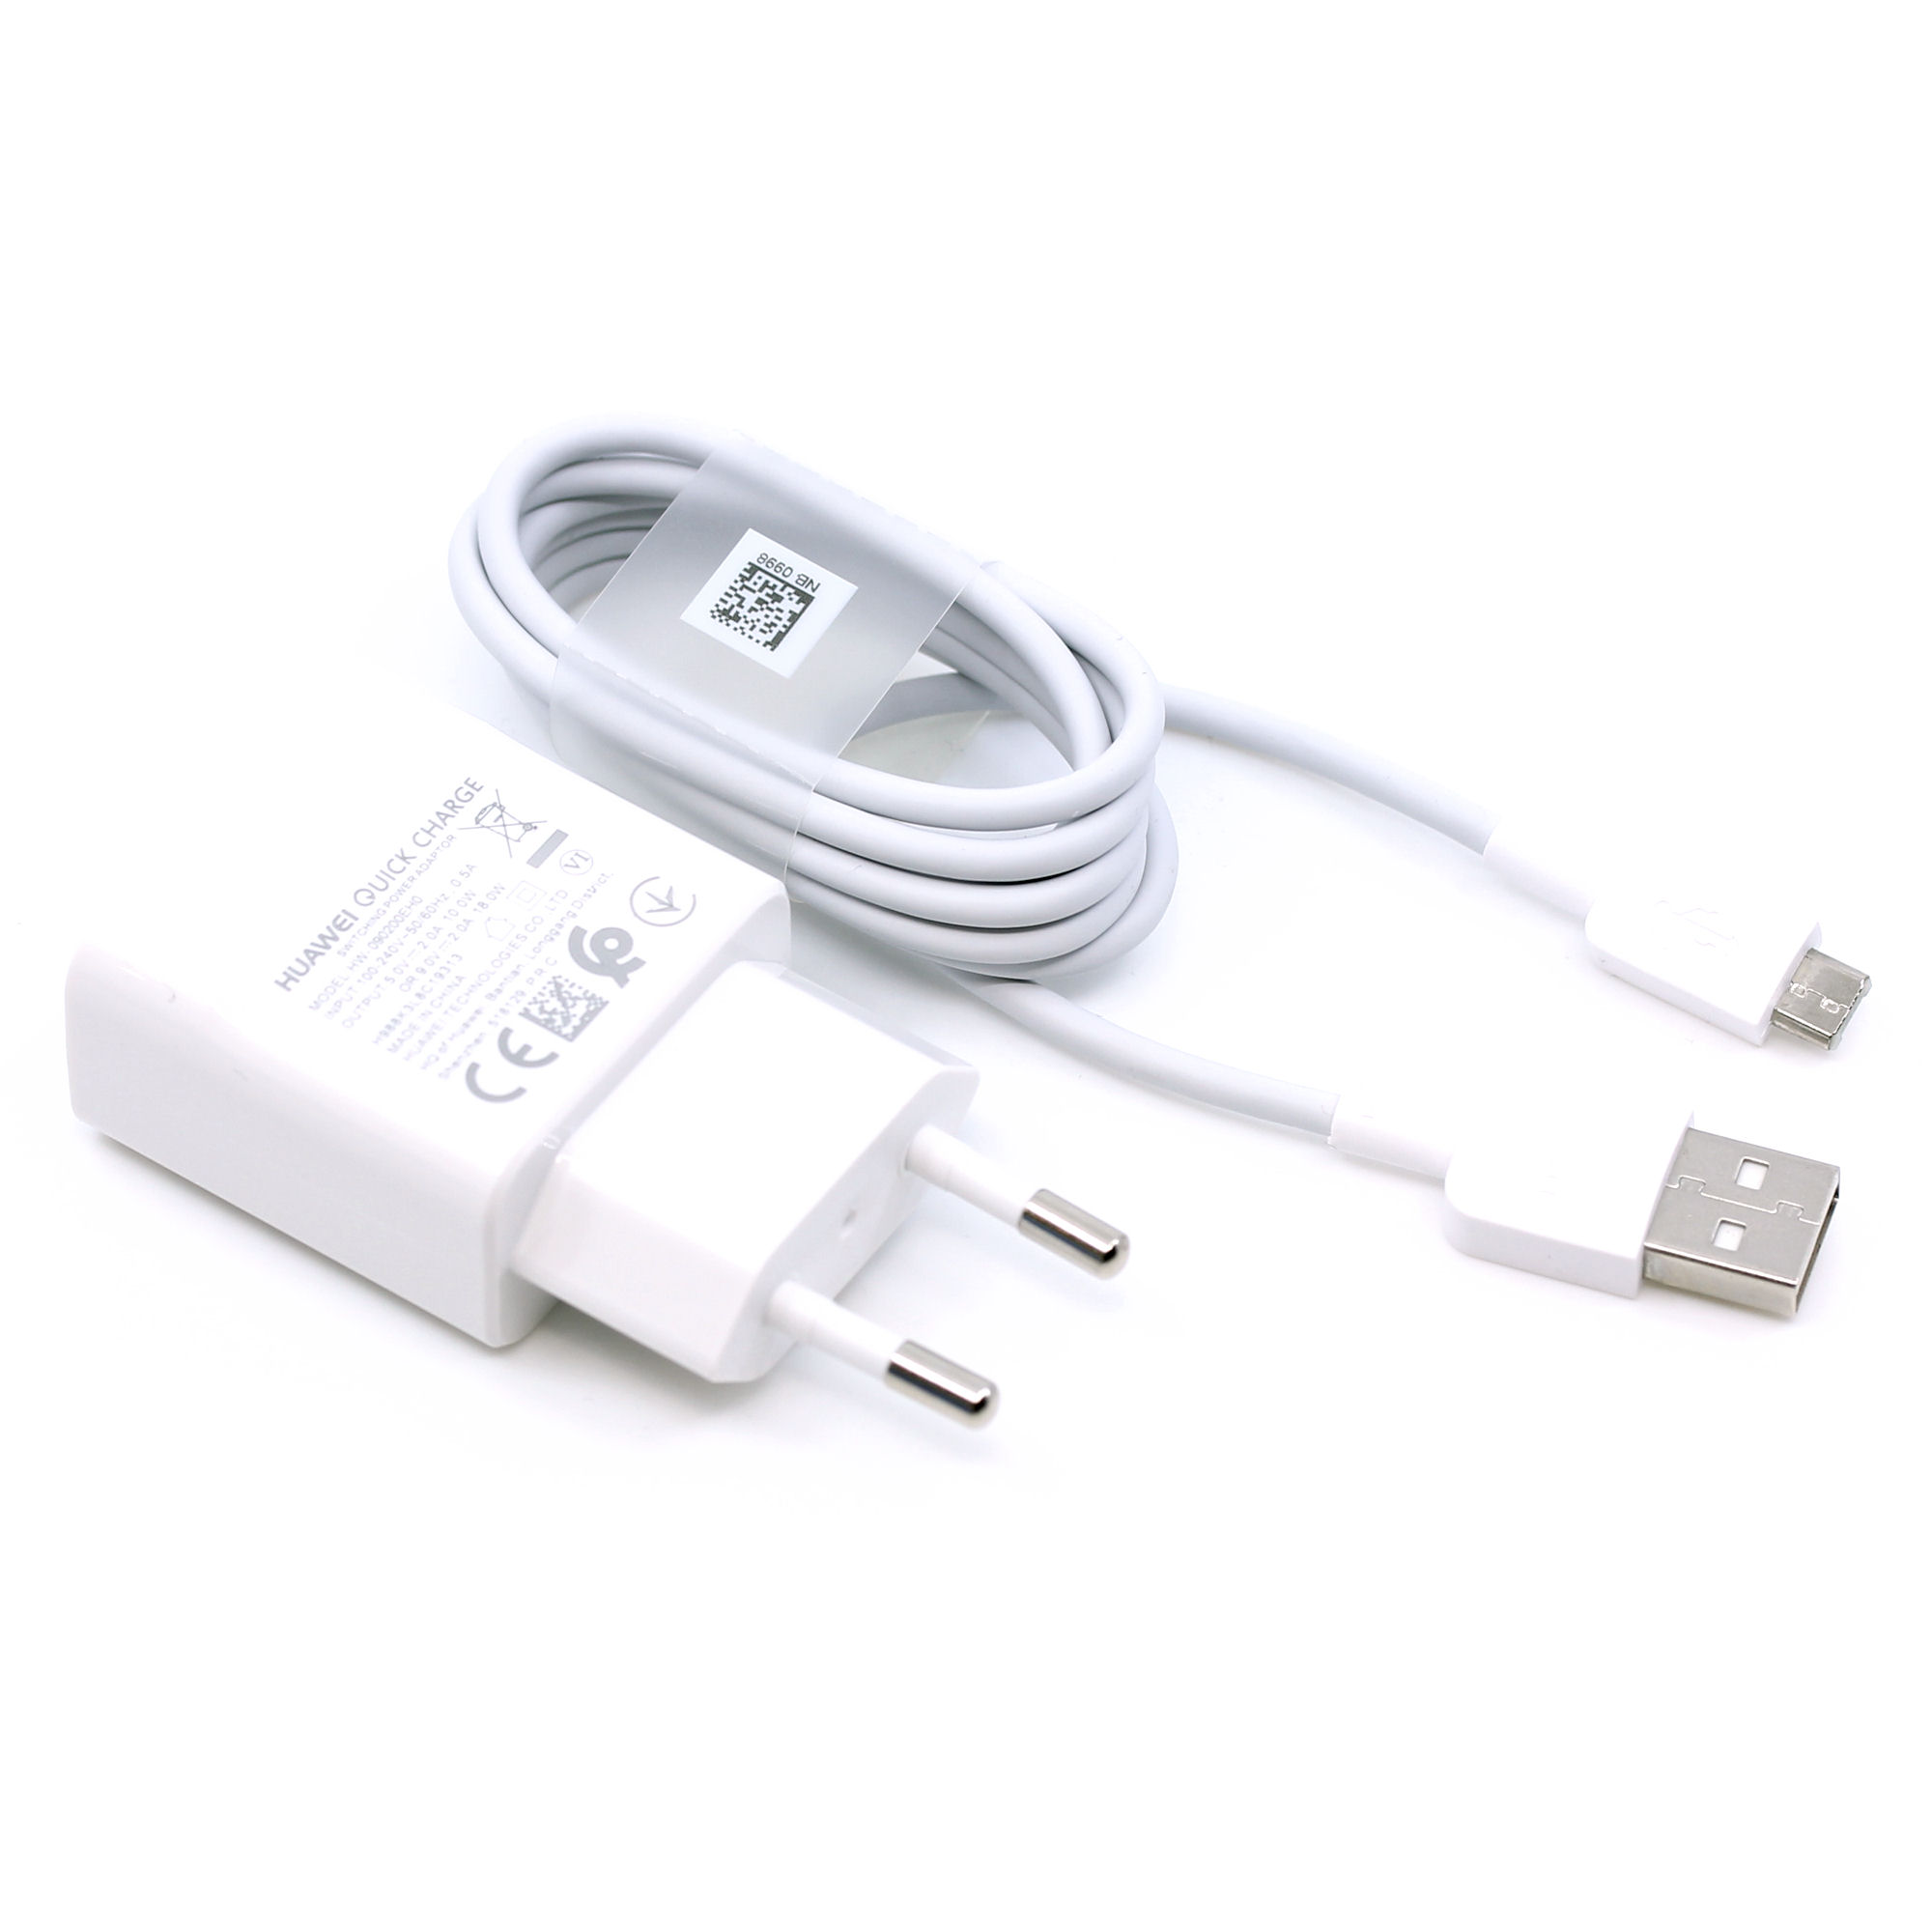 Huawei Ladegerät HW-090200EH0 Micro-USB QuickCharge mit Kabel weiß